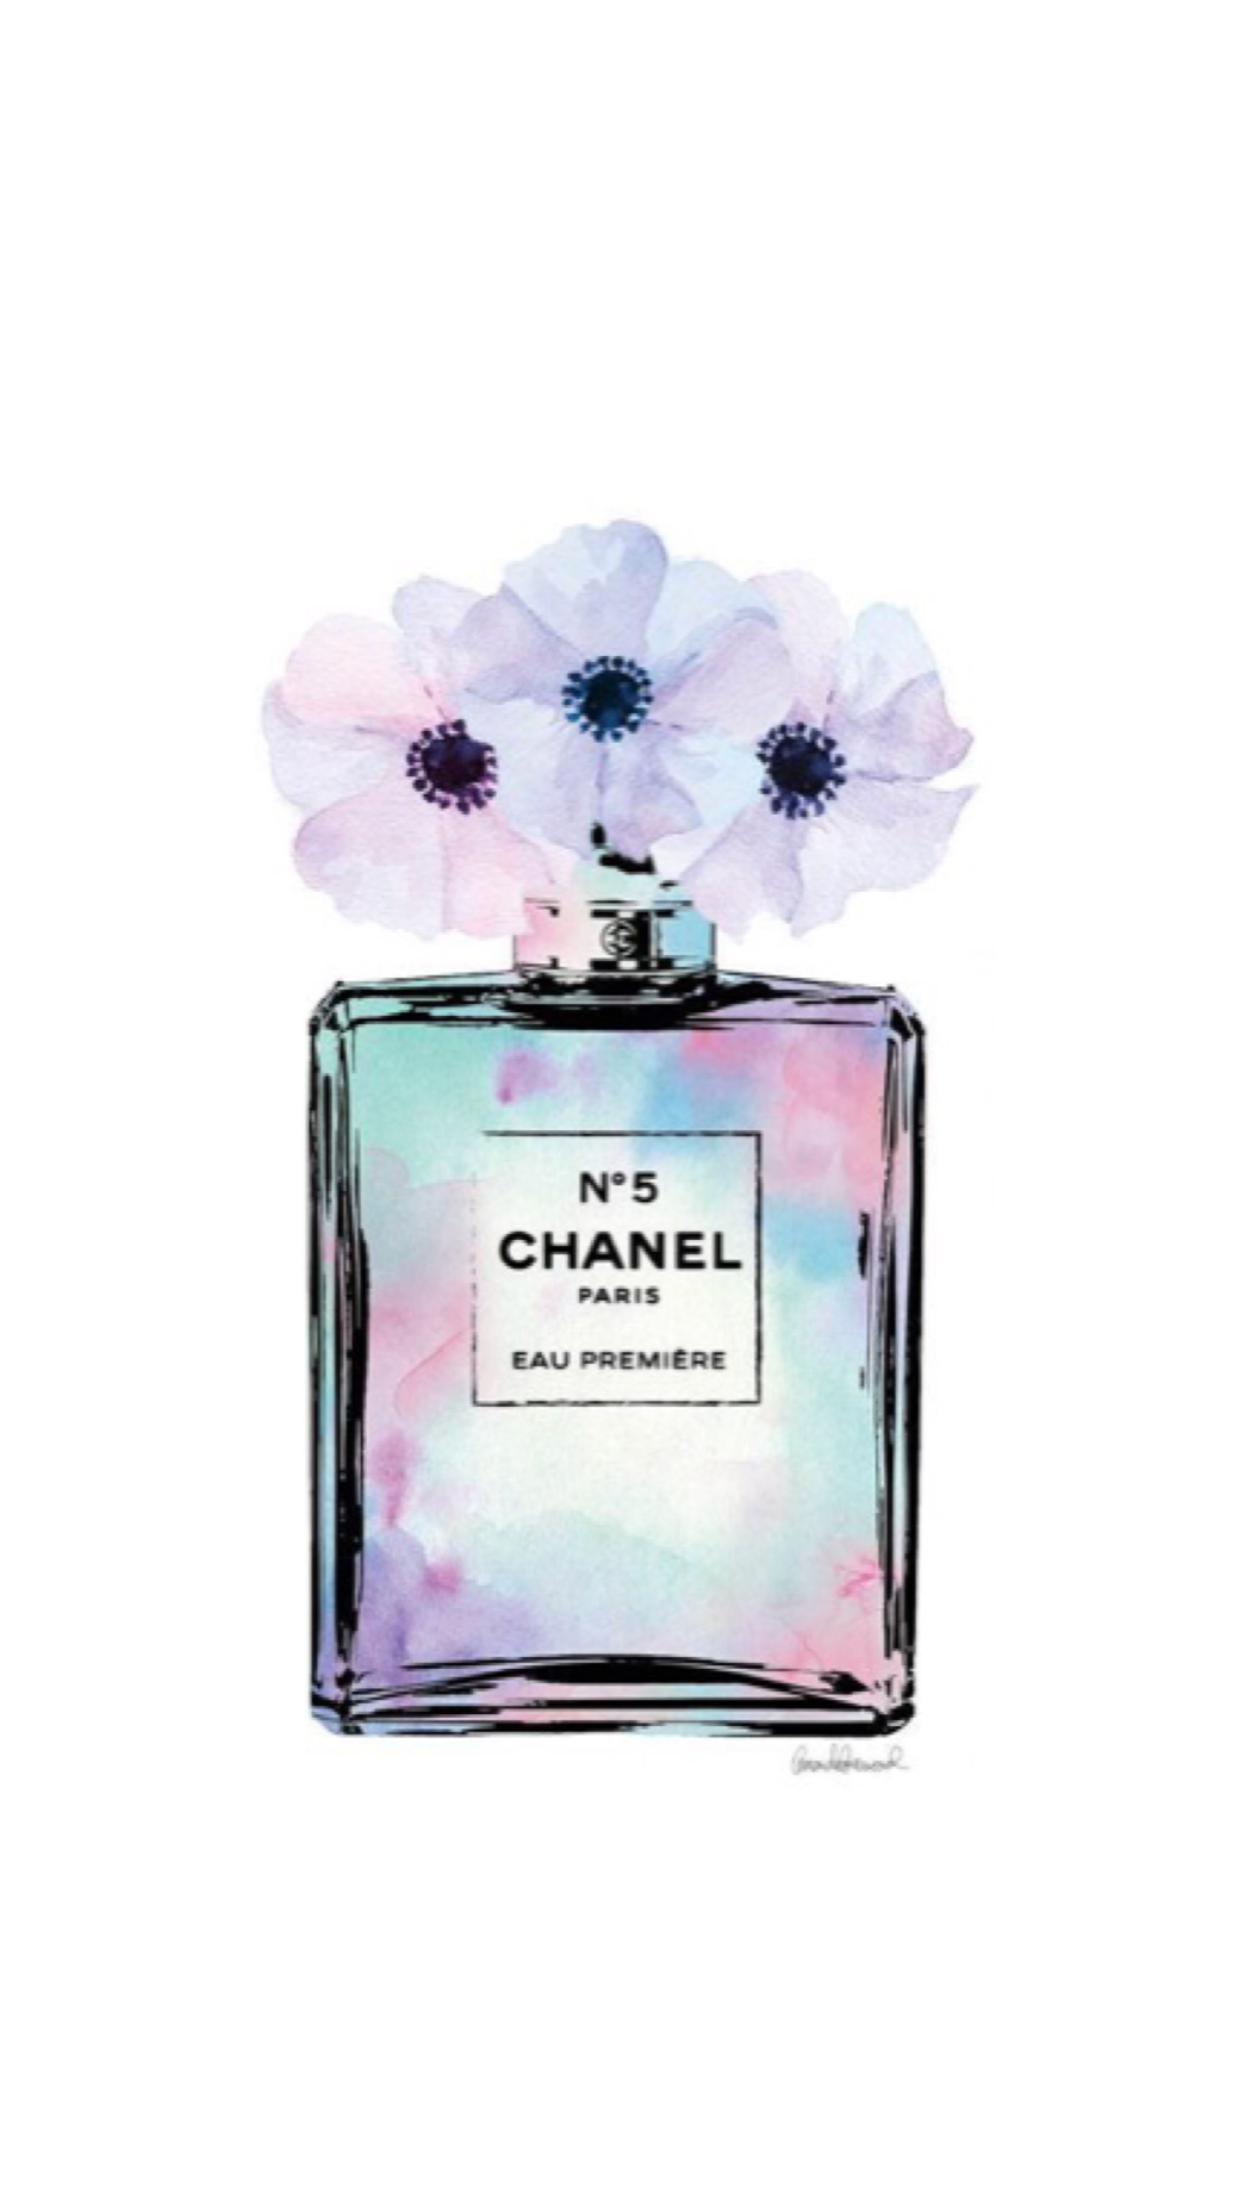 Wallpaper vol.41. Chanel art, Perfume art